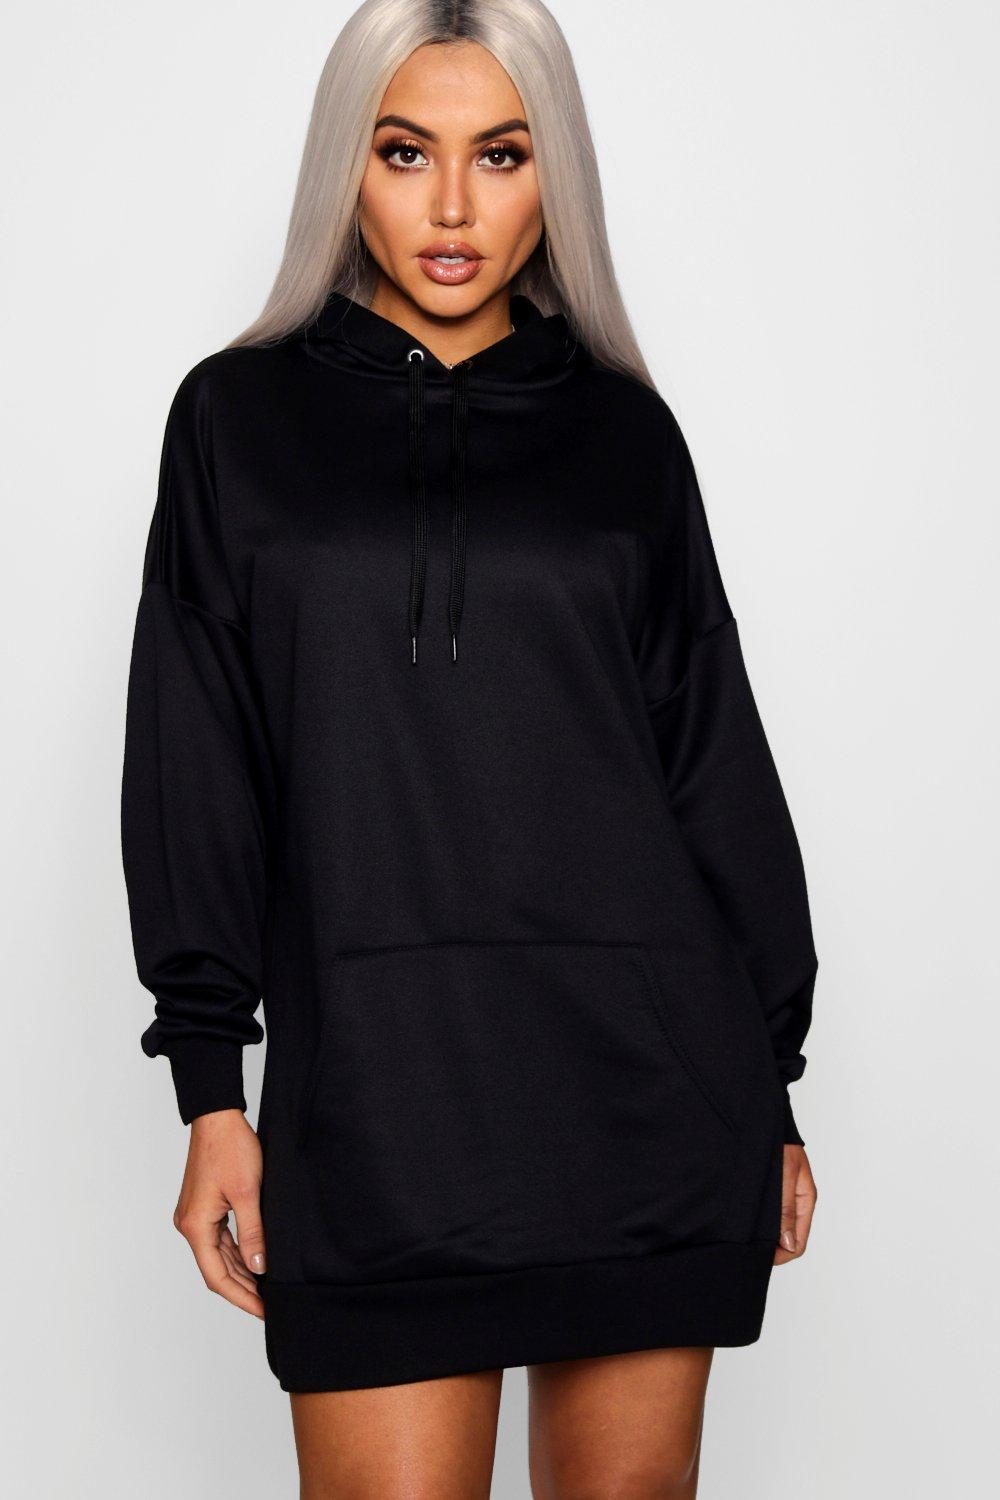 oversized black hoodie dress